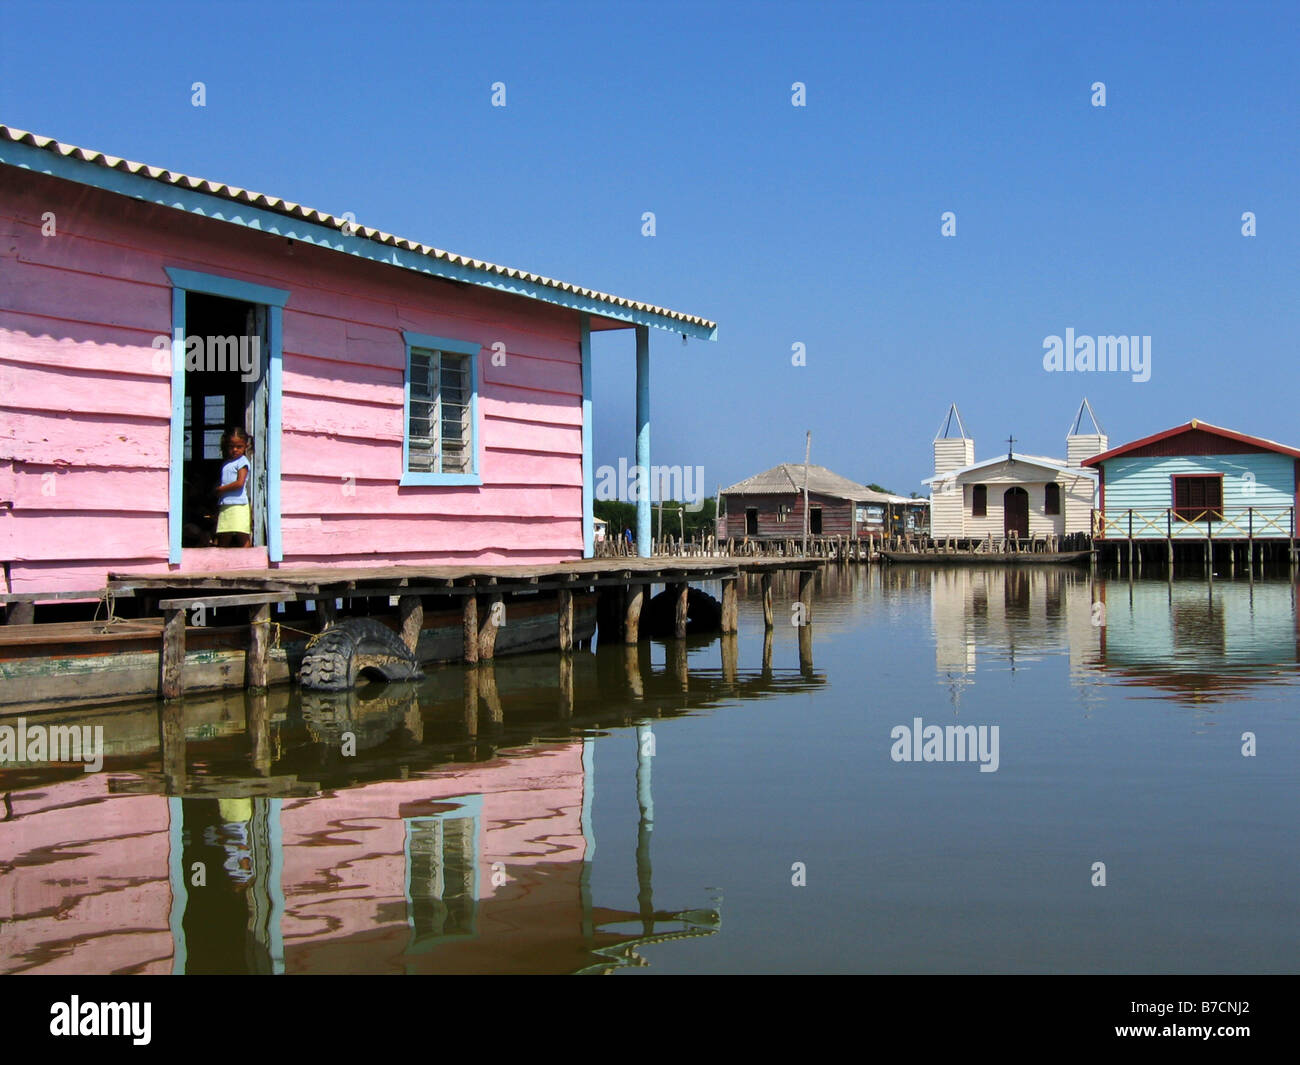 Colorfoul stilt buildings in the lagoon Cinaga Grande de Santa, Colombia, Cinaga Grande de Santa Stock Photo